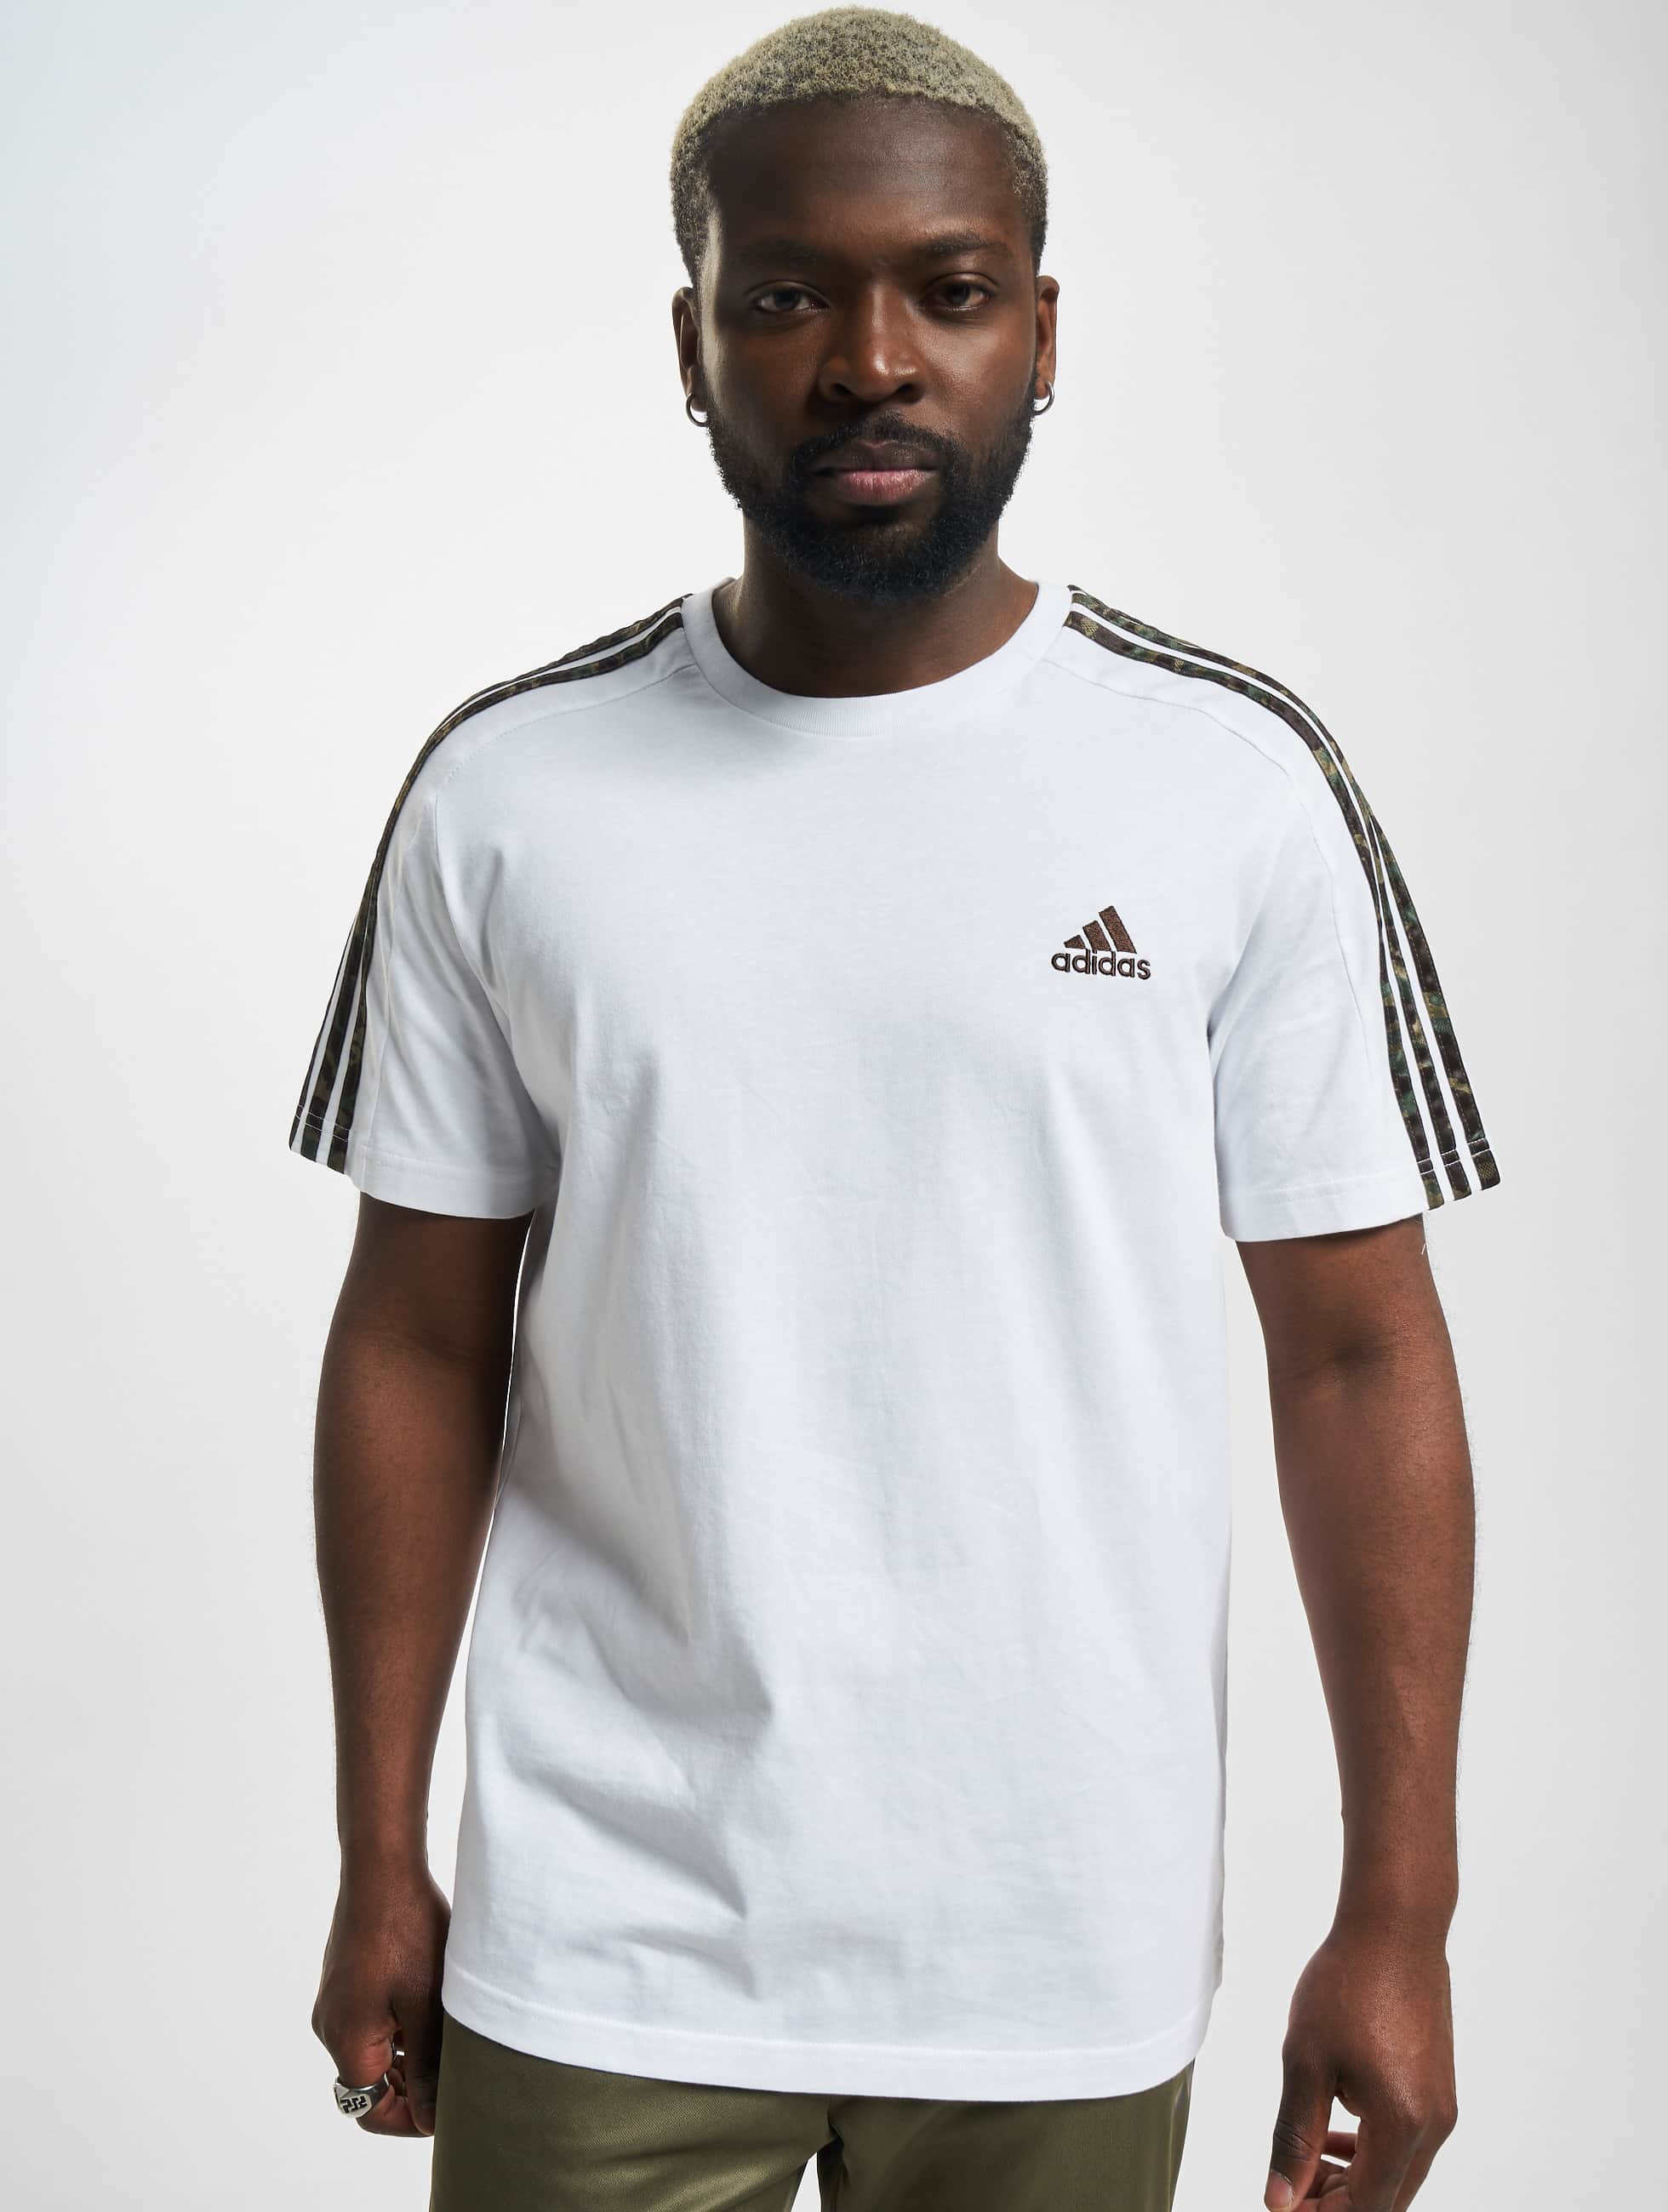 Napier at donere Ocean adidas Originals Overwear / T-Shirt Originals 3S in white 970712